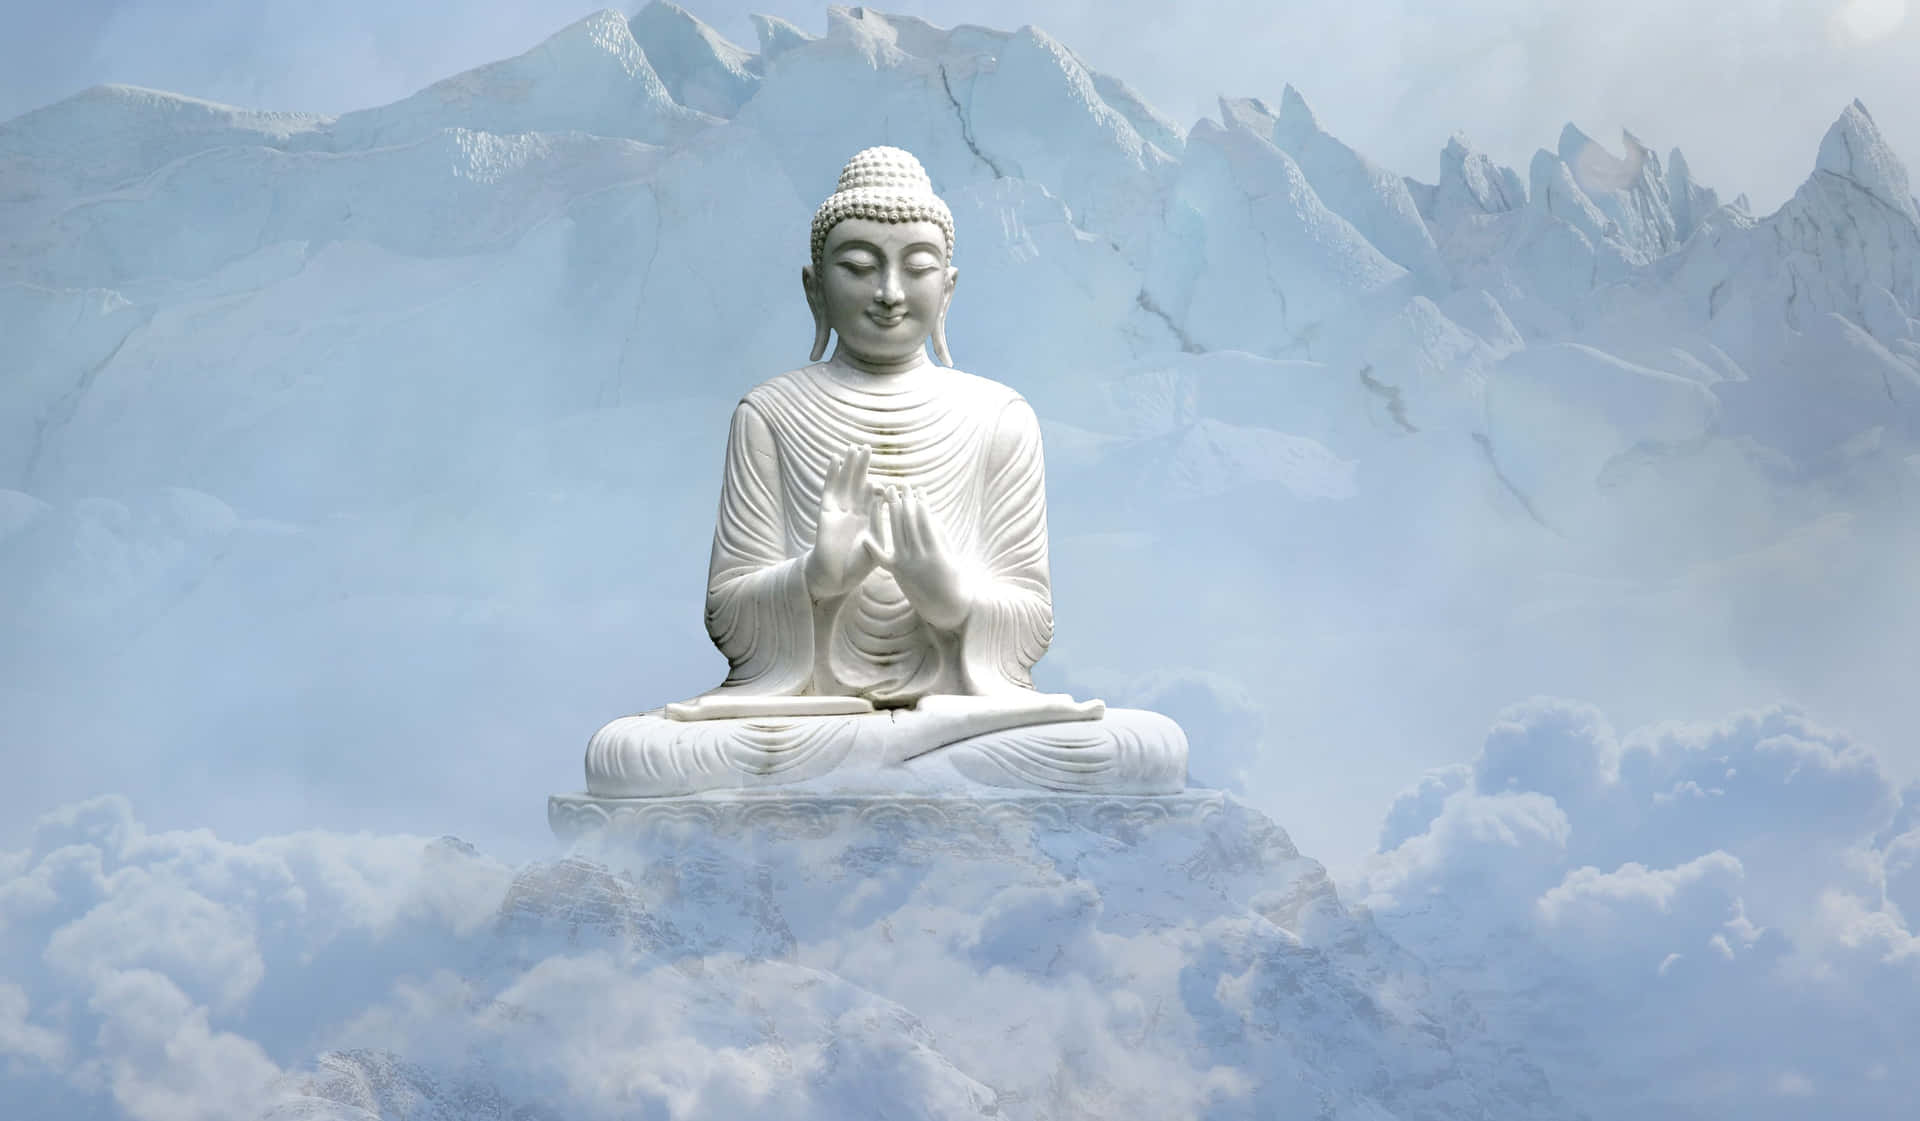 Meditating with a peaceful Buddha